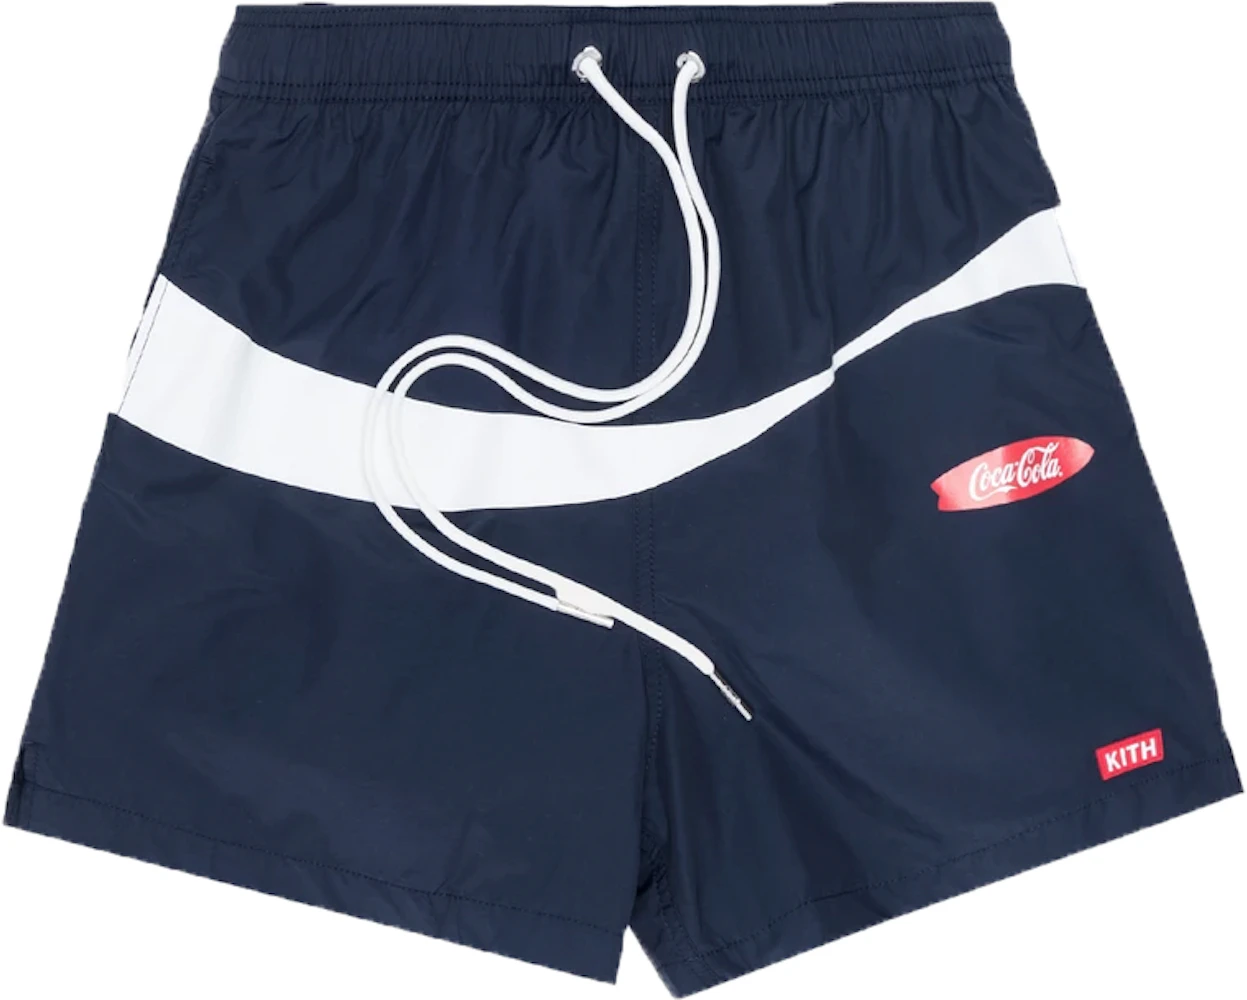 Kith x Coca-Cola Convertible Swim Shorts Navy Men's - SS19 - US